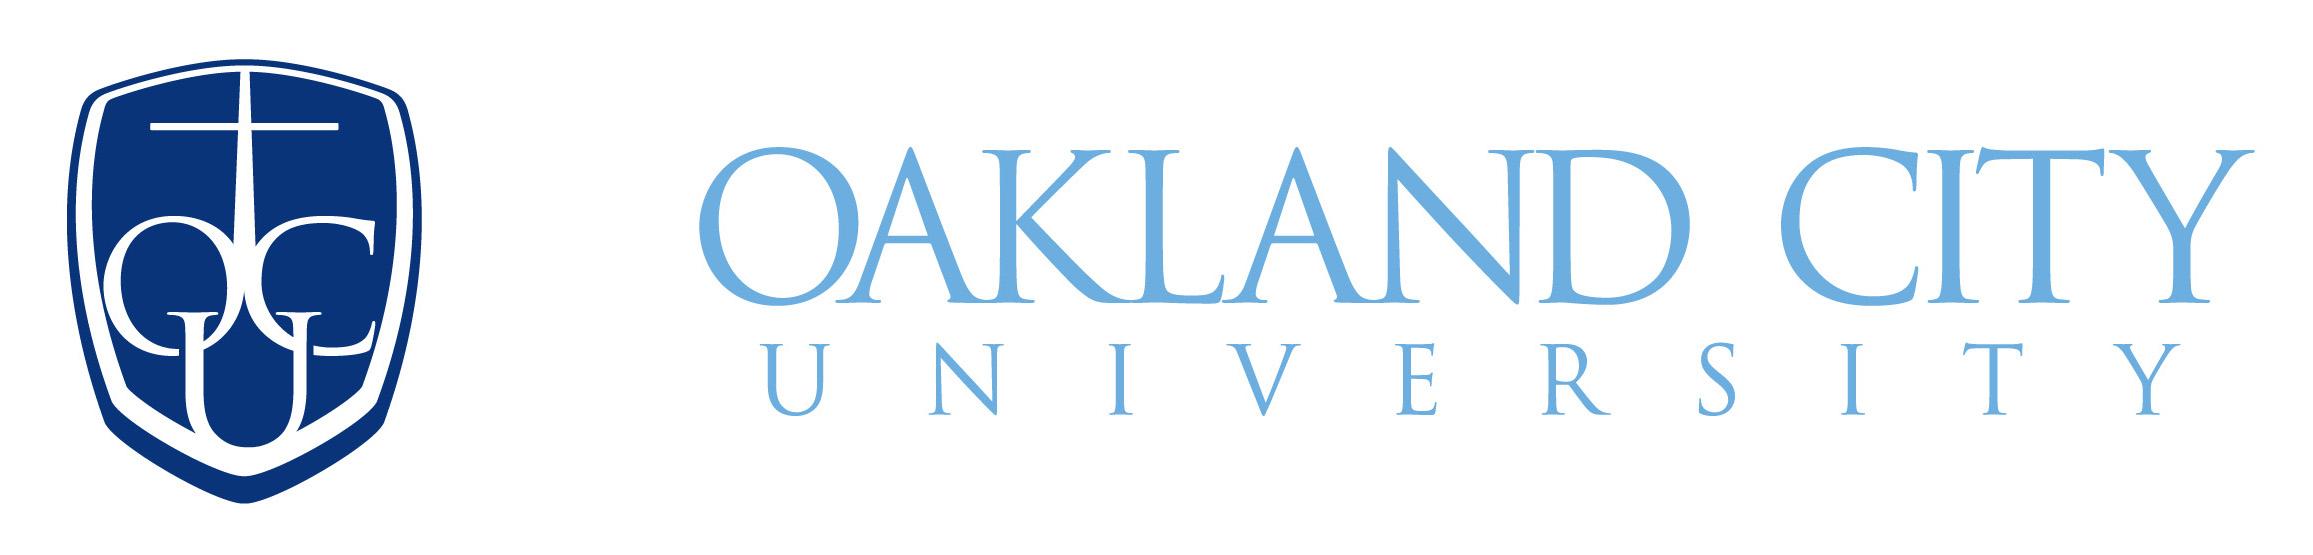 Ocu Logo - Oakland City University | CCNIT Mens Basketball Championship ...